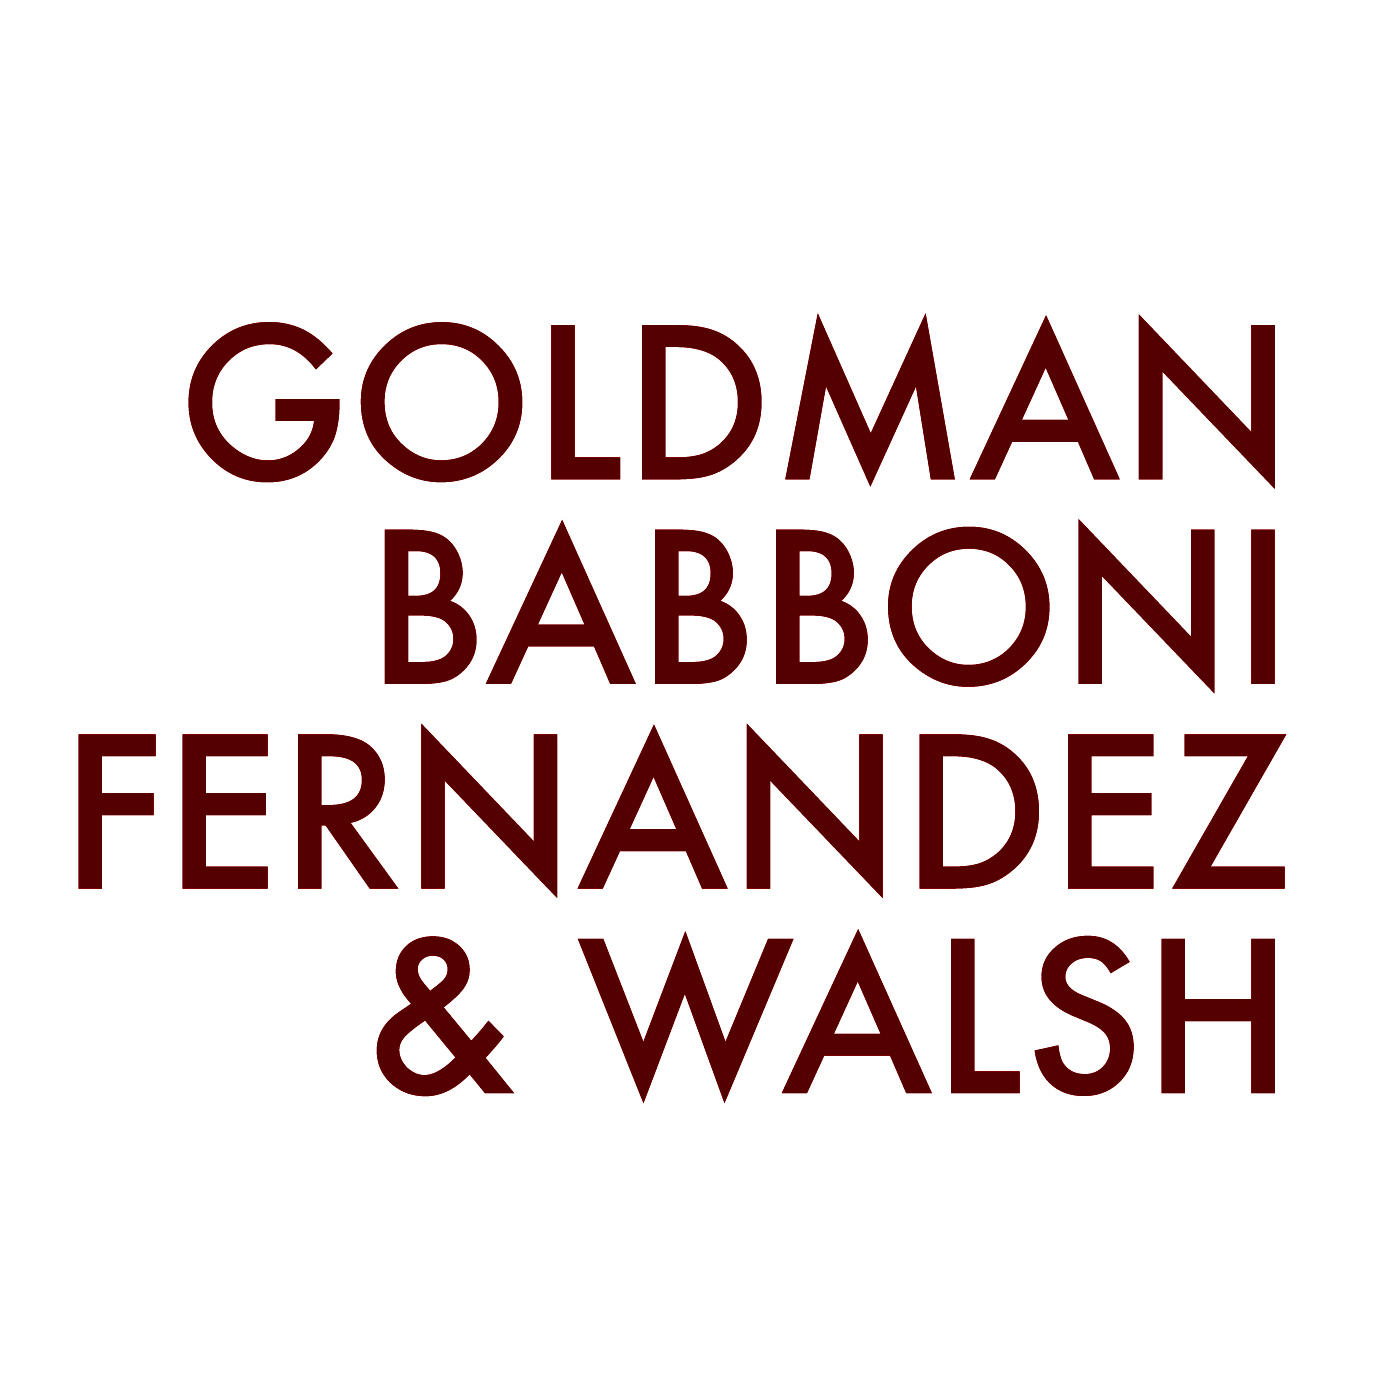 Goldman Babboni Fernandez & Walsh Photo